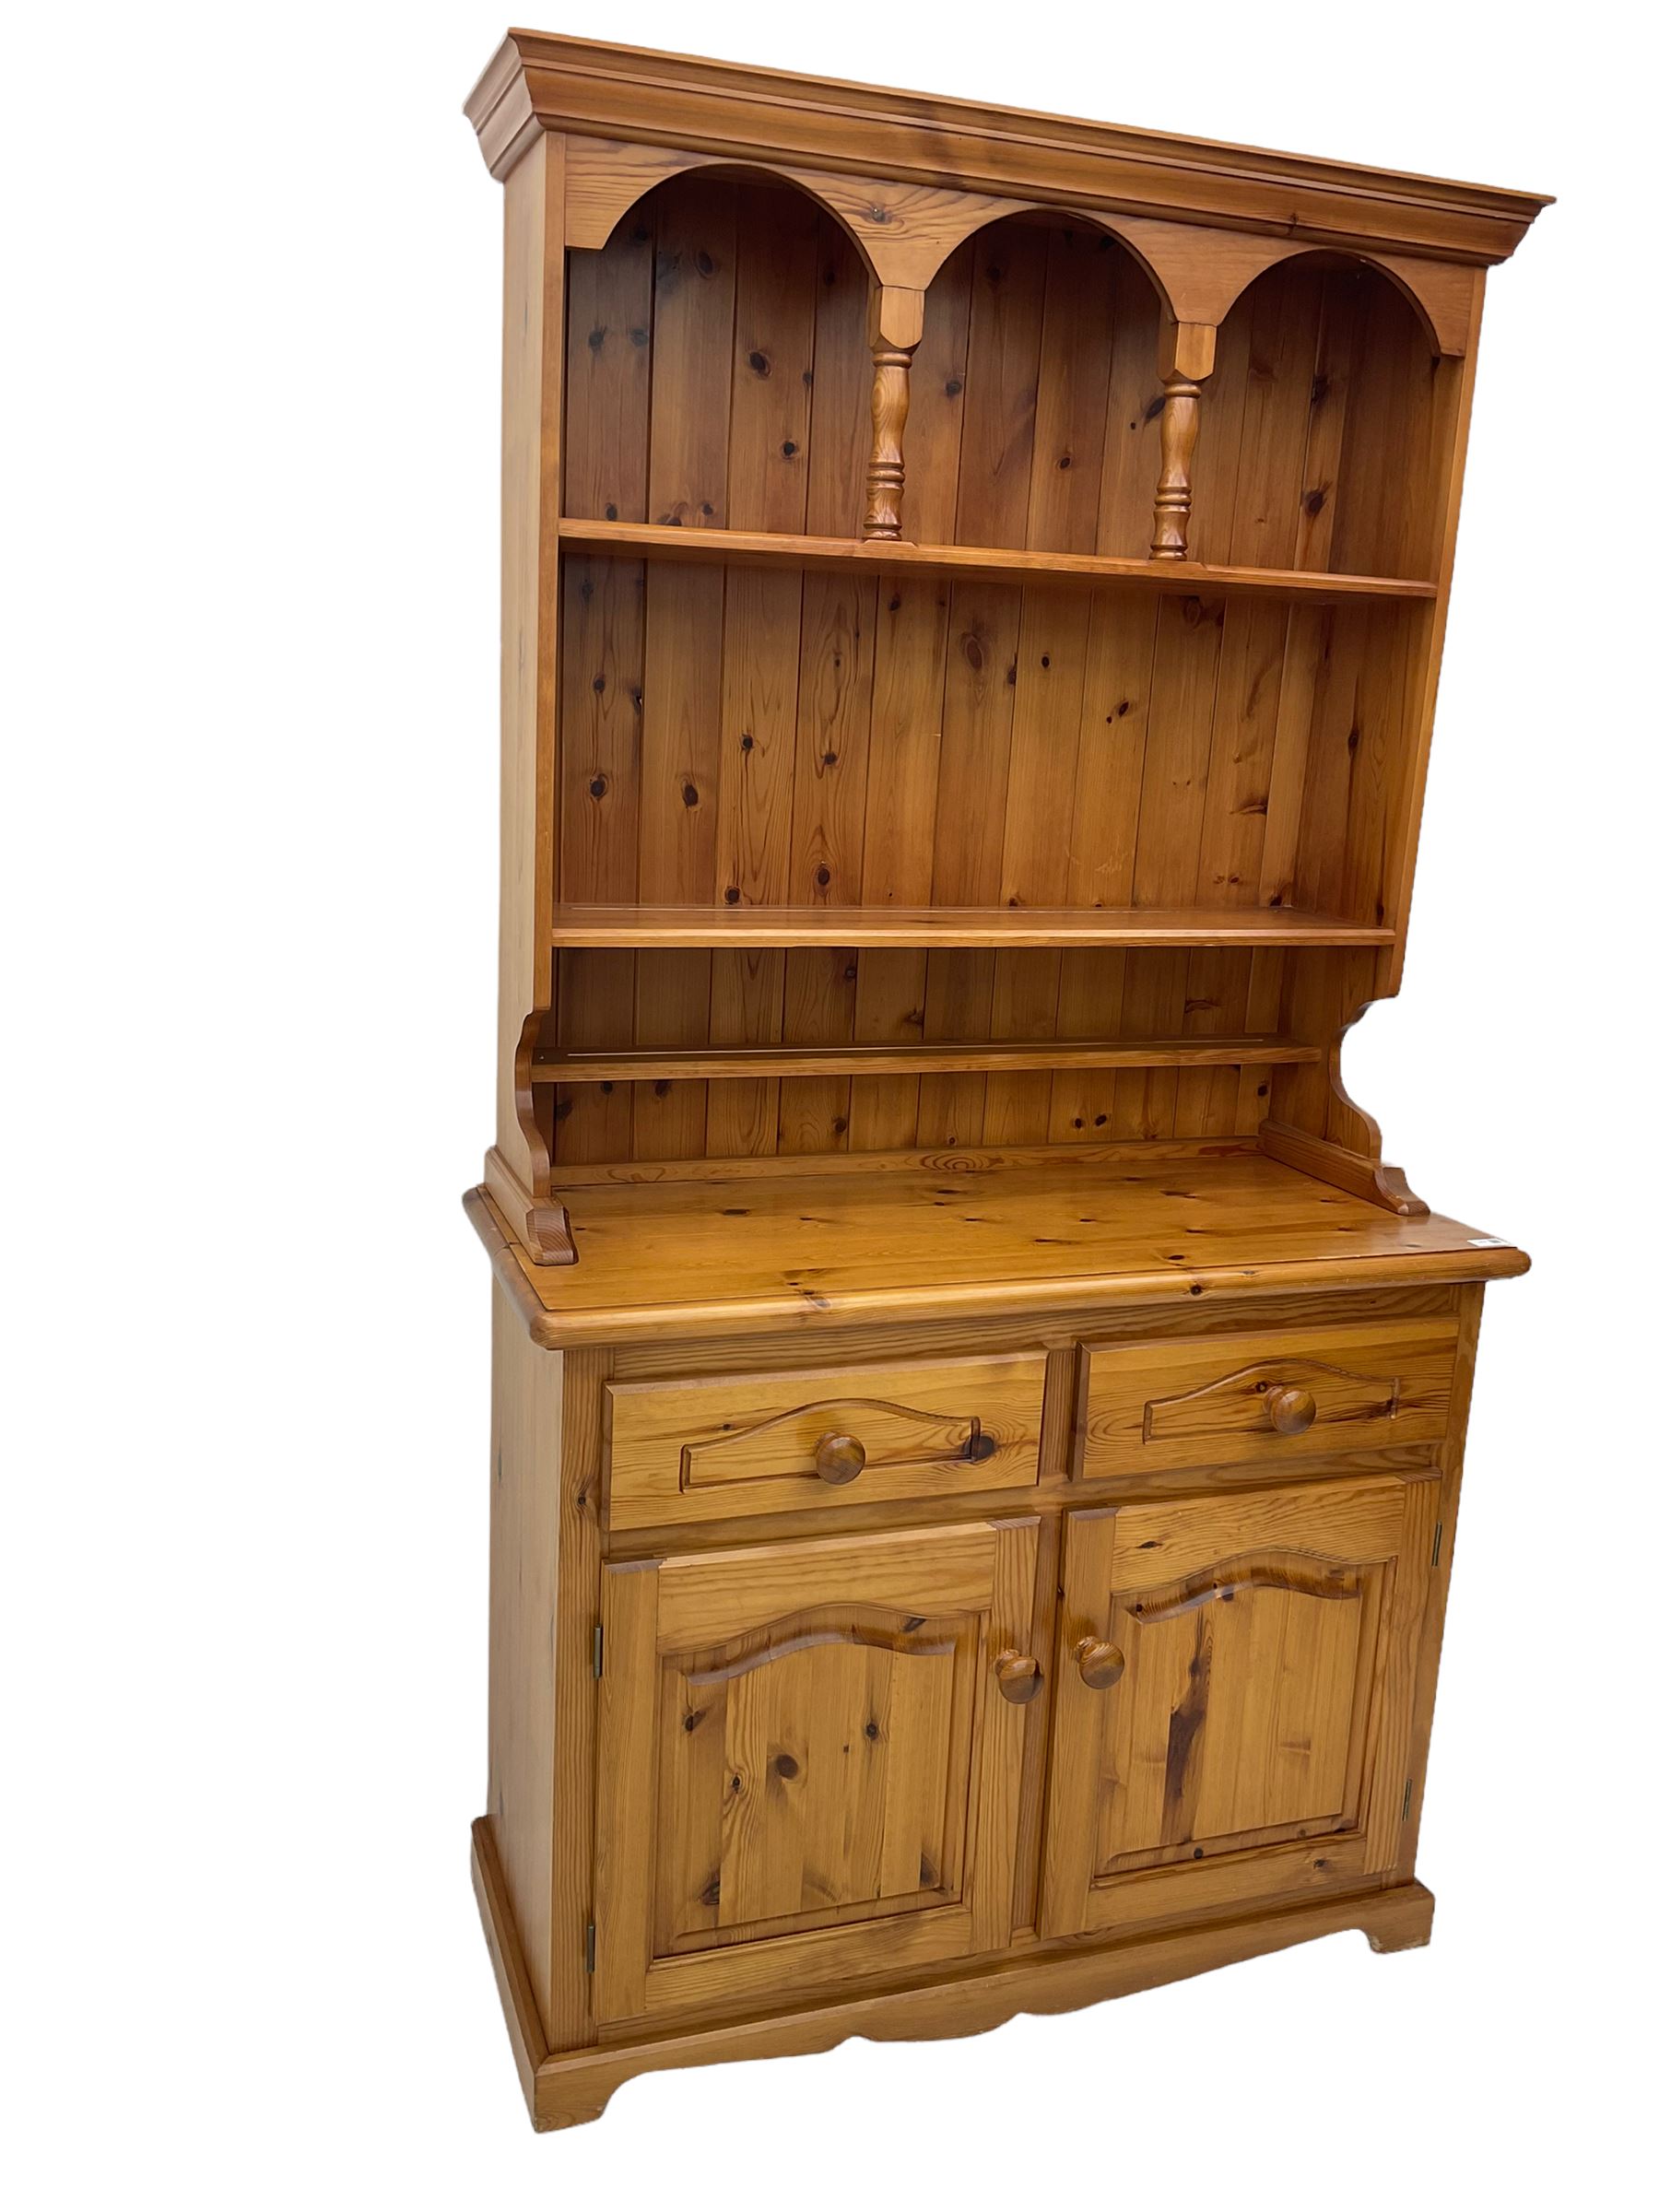 Solid pine kitchen dresser - Image 4 of 6